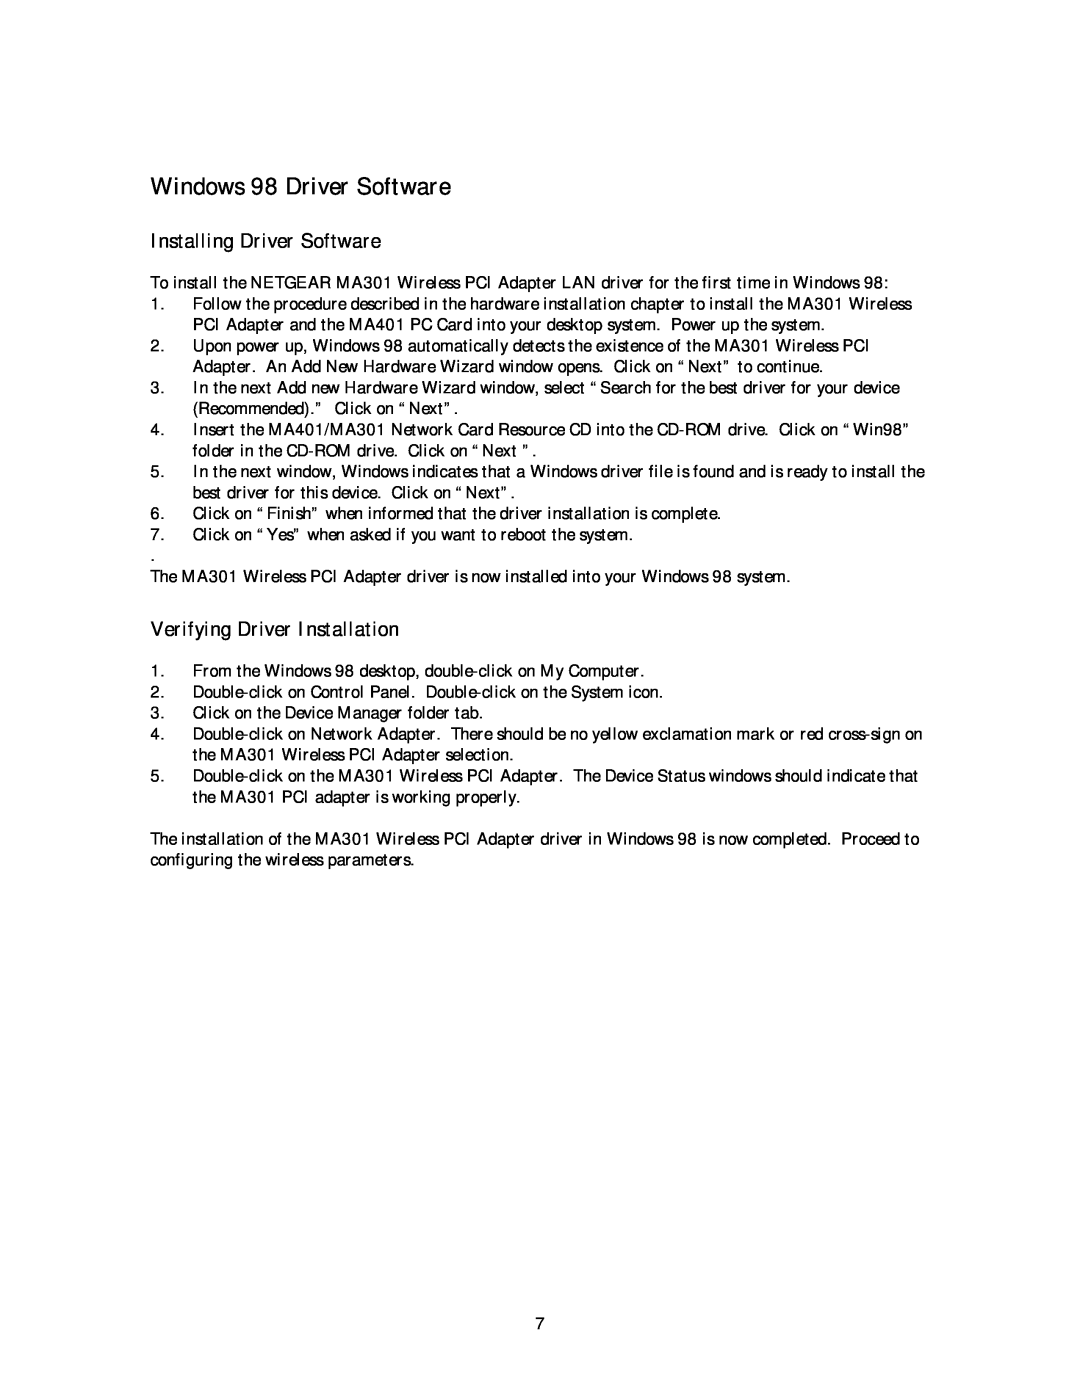 NETGEAR MA 301 manual Windows 98 Driver Software, Installing Driver Software, Verifying Driver Installation 